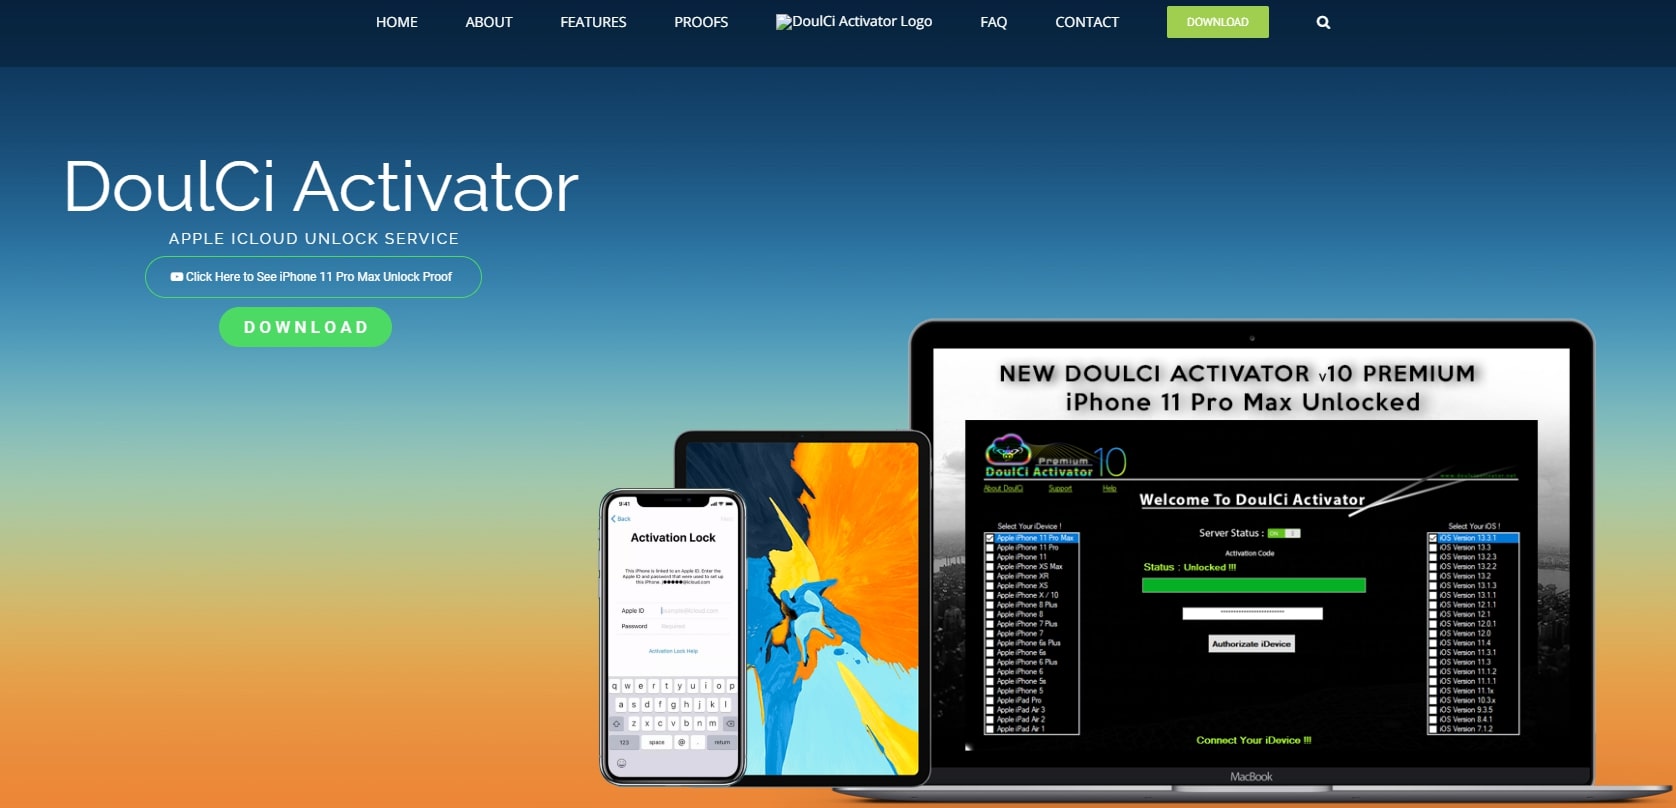 doulci activator crack free download